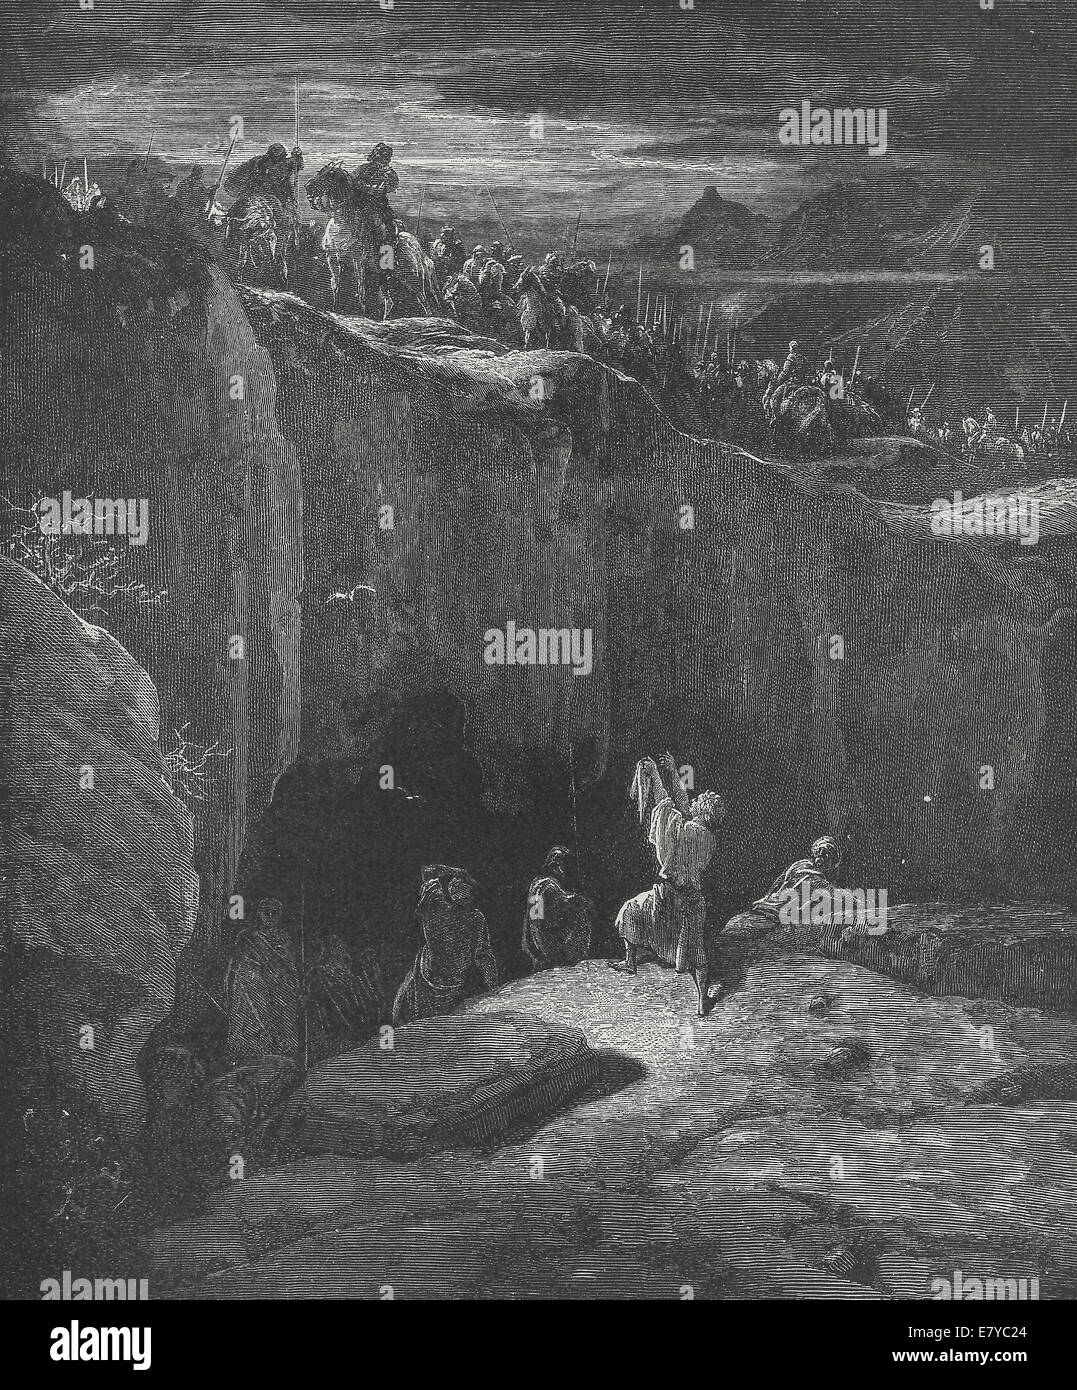 King david bible hi-res stock photography and images - Alamy